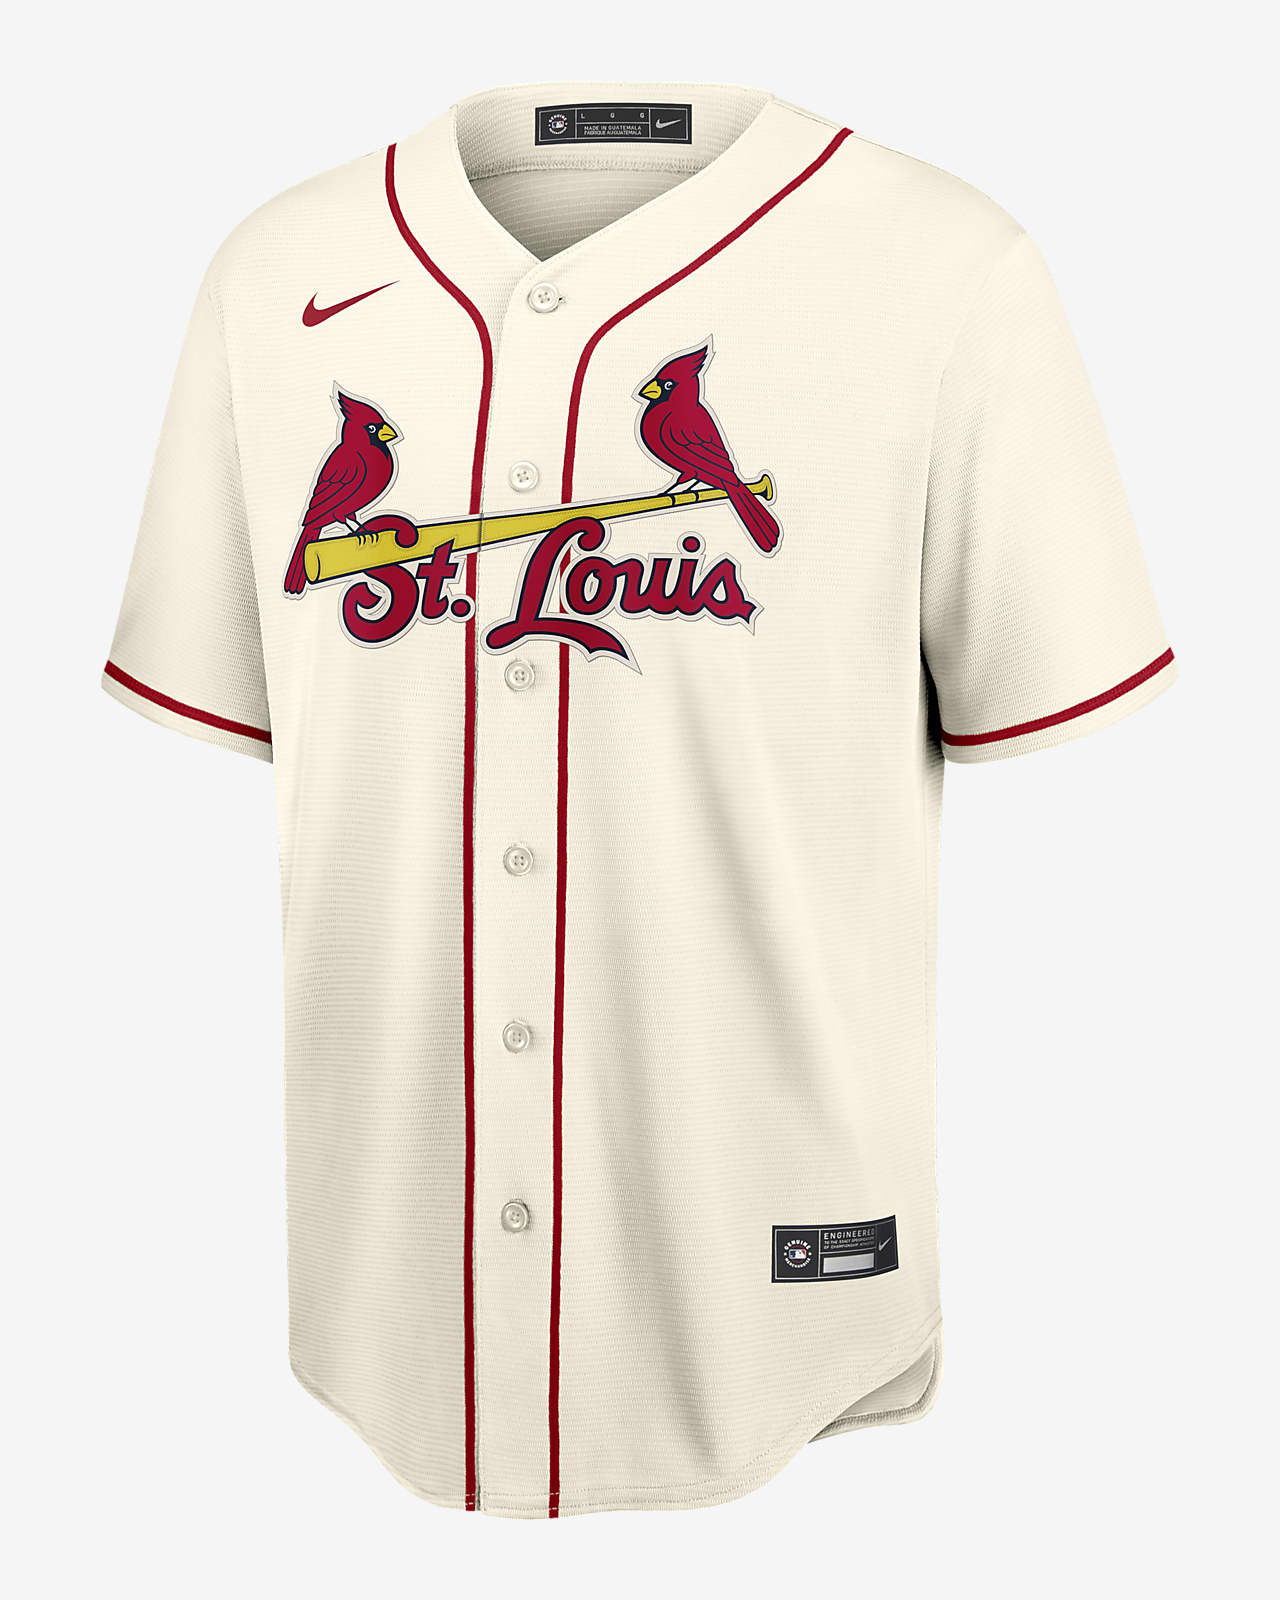 st louis cardinals baseball jersey